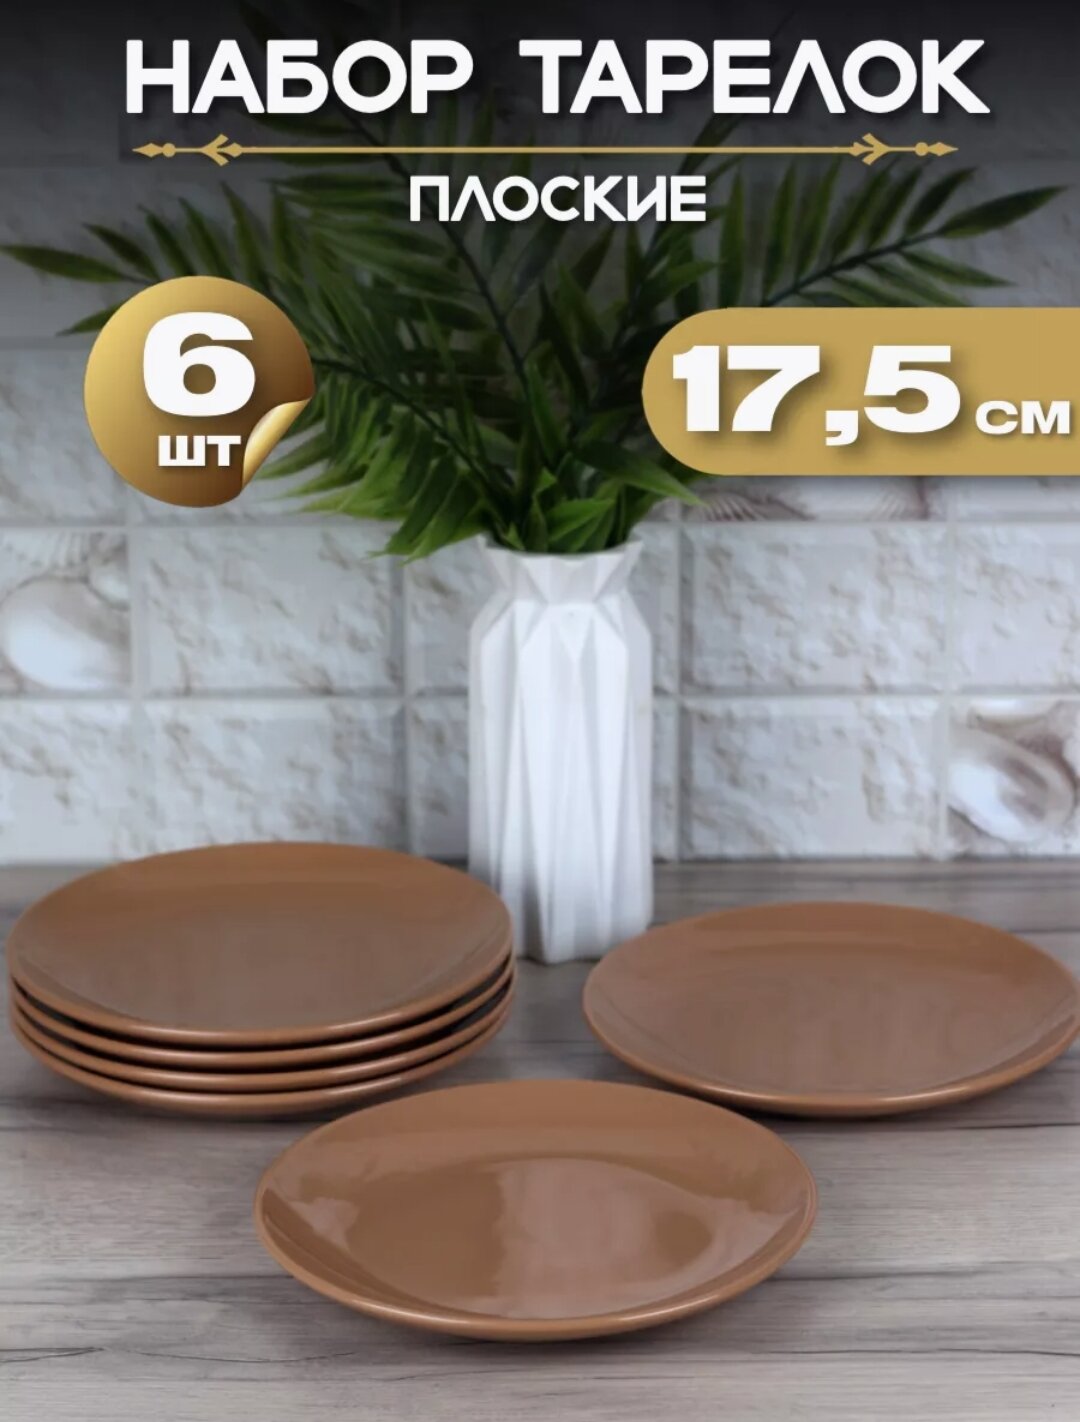 Тарелка плоская "Шоколад глянец" d17,5 см/ Набор тарелок 6 шт